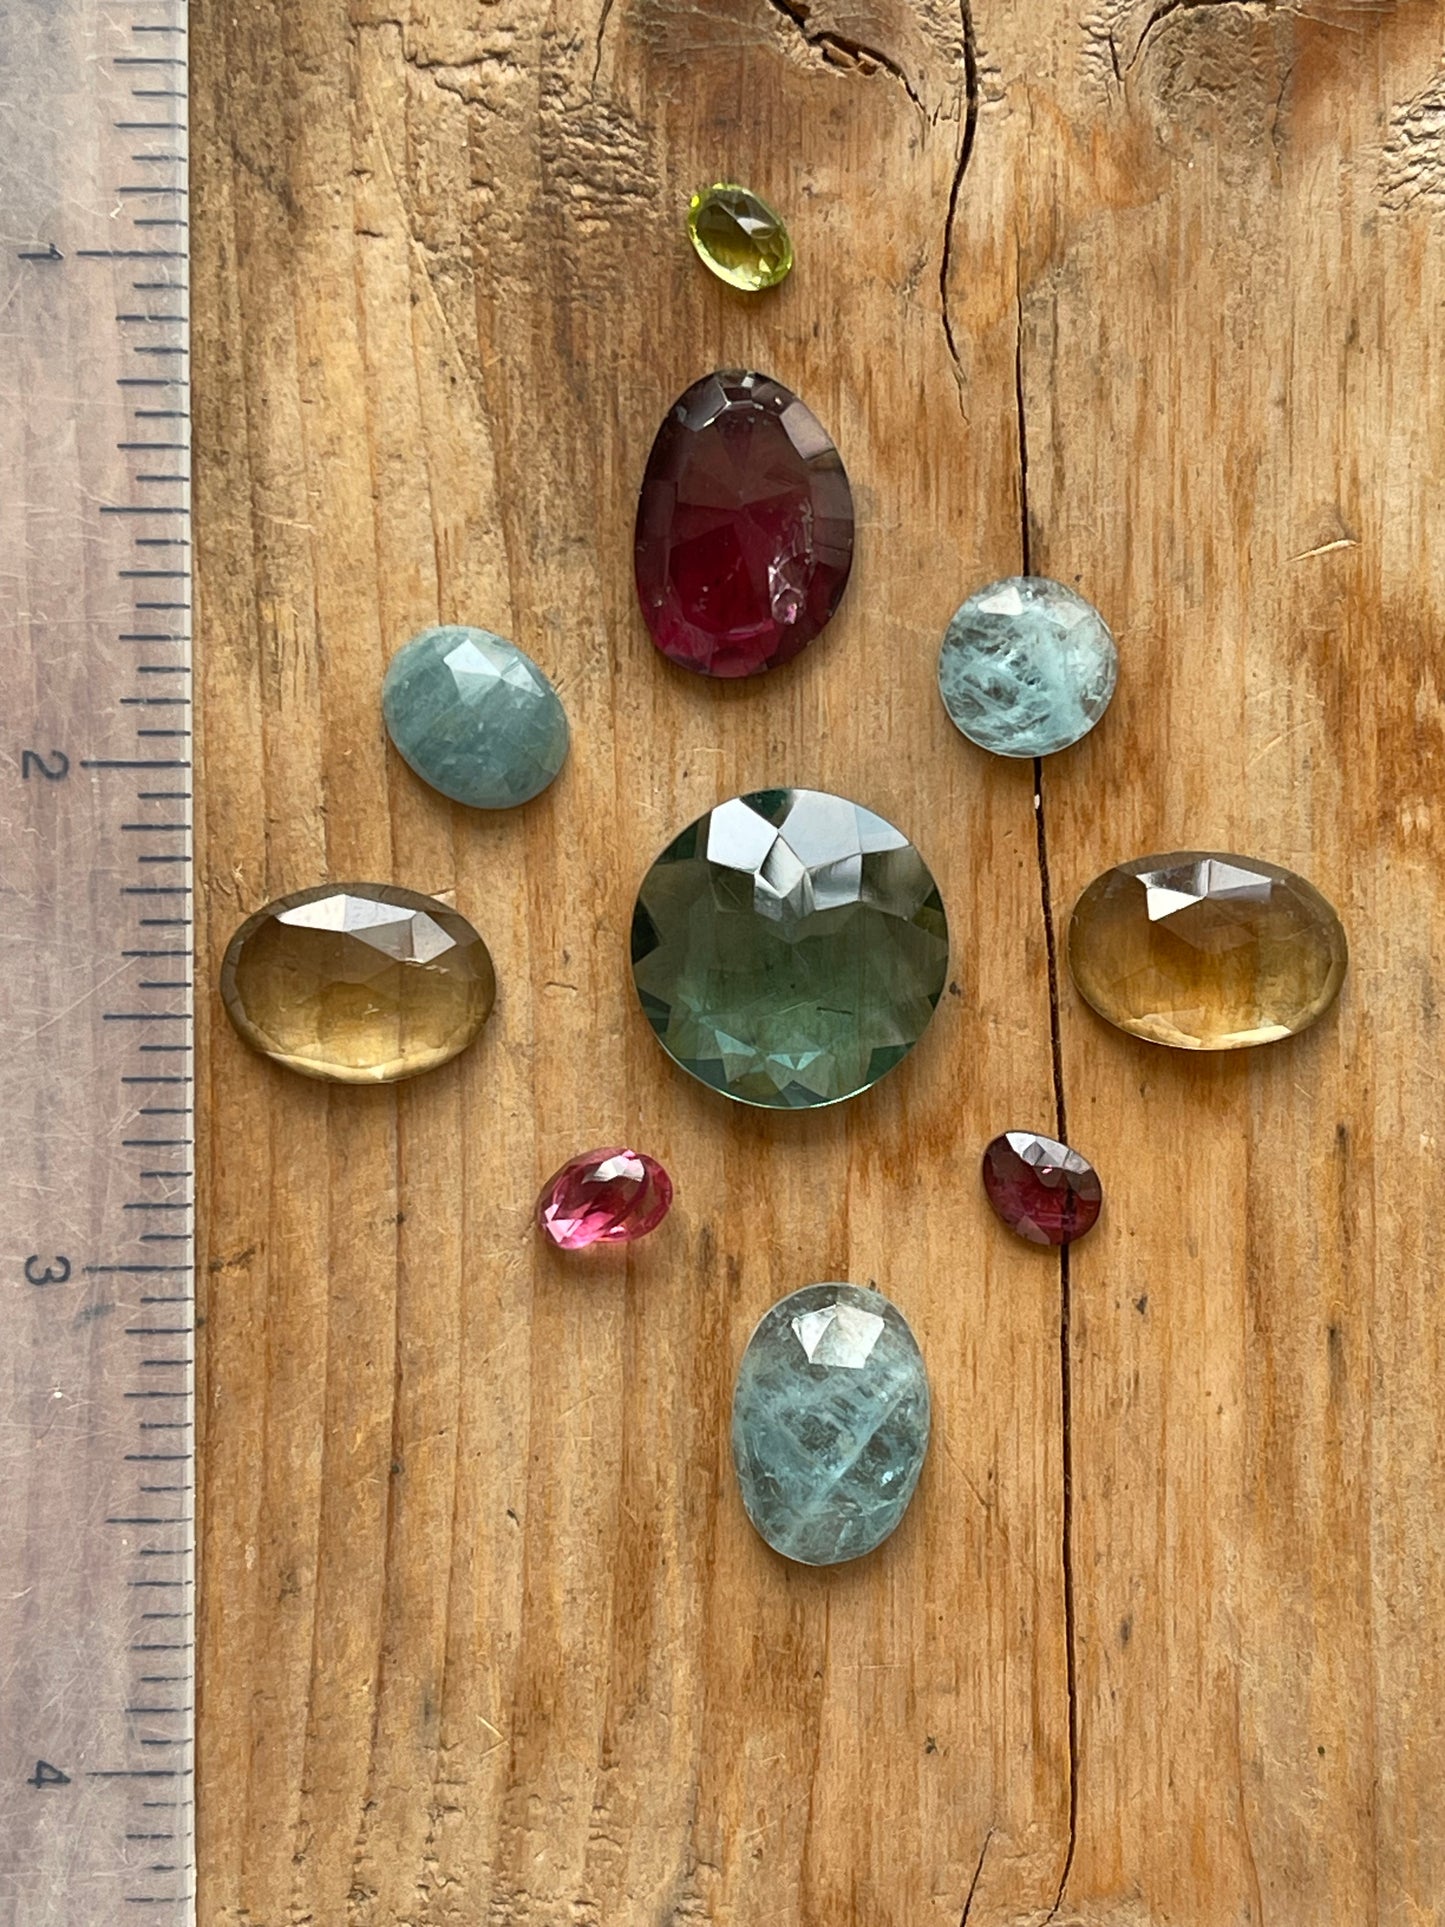 Gemstone Collection 42: Aquamarine, Fluorite, Lemon Quartz, Rhodolite Garnet, Peridot, Rainbow Tourmaline - 36CT